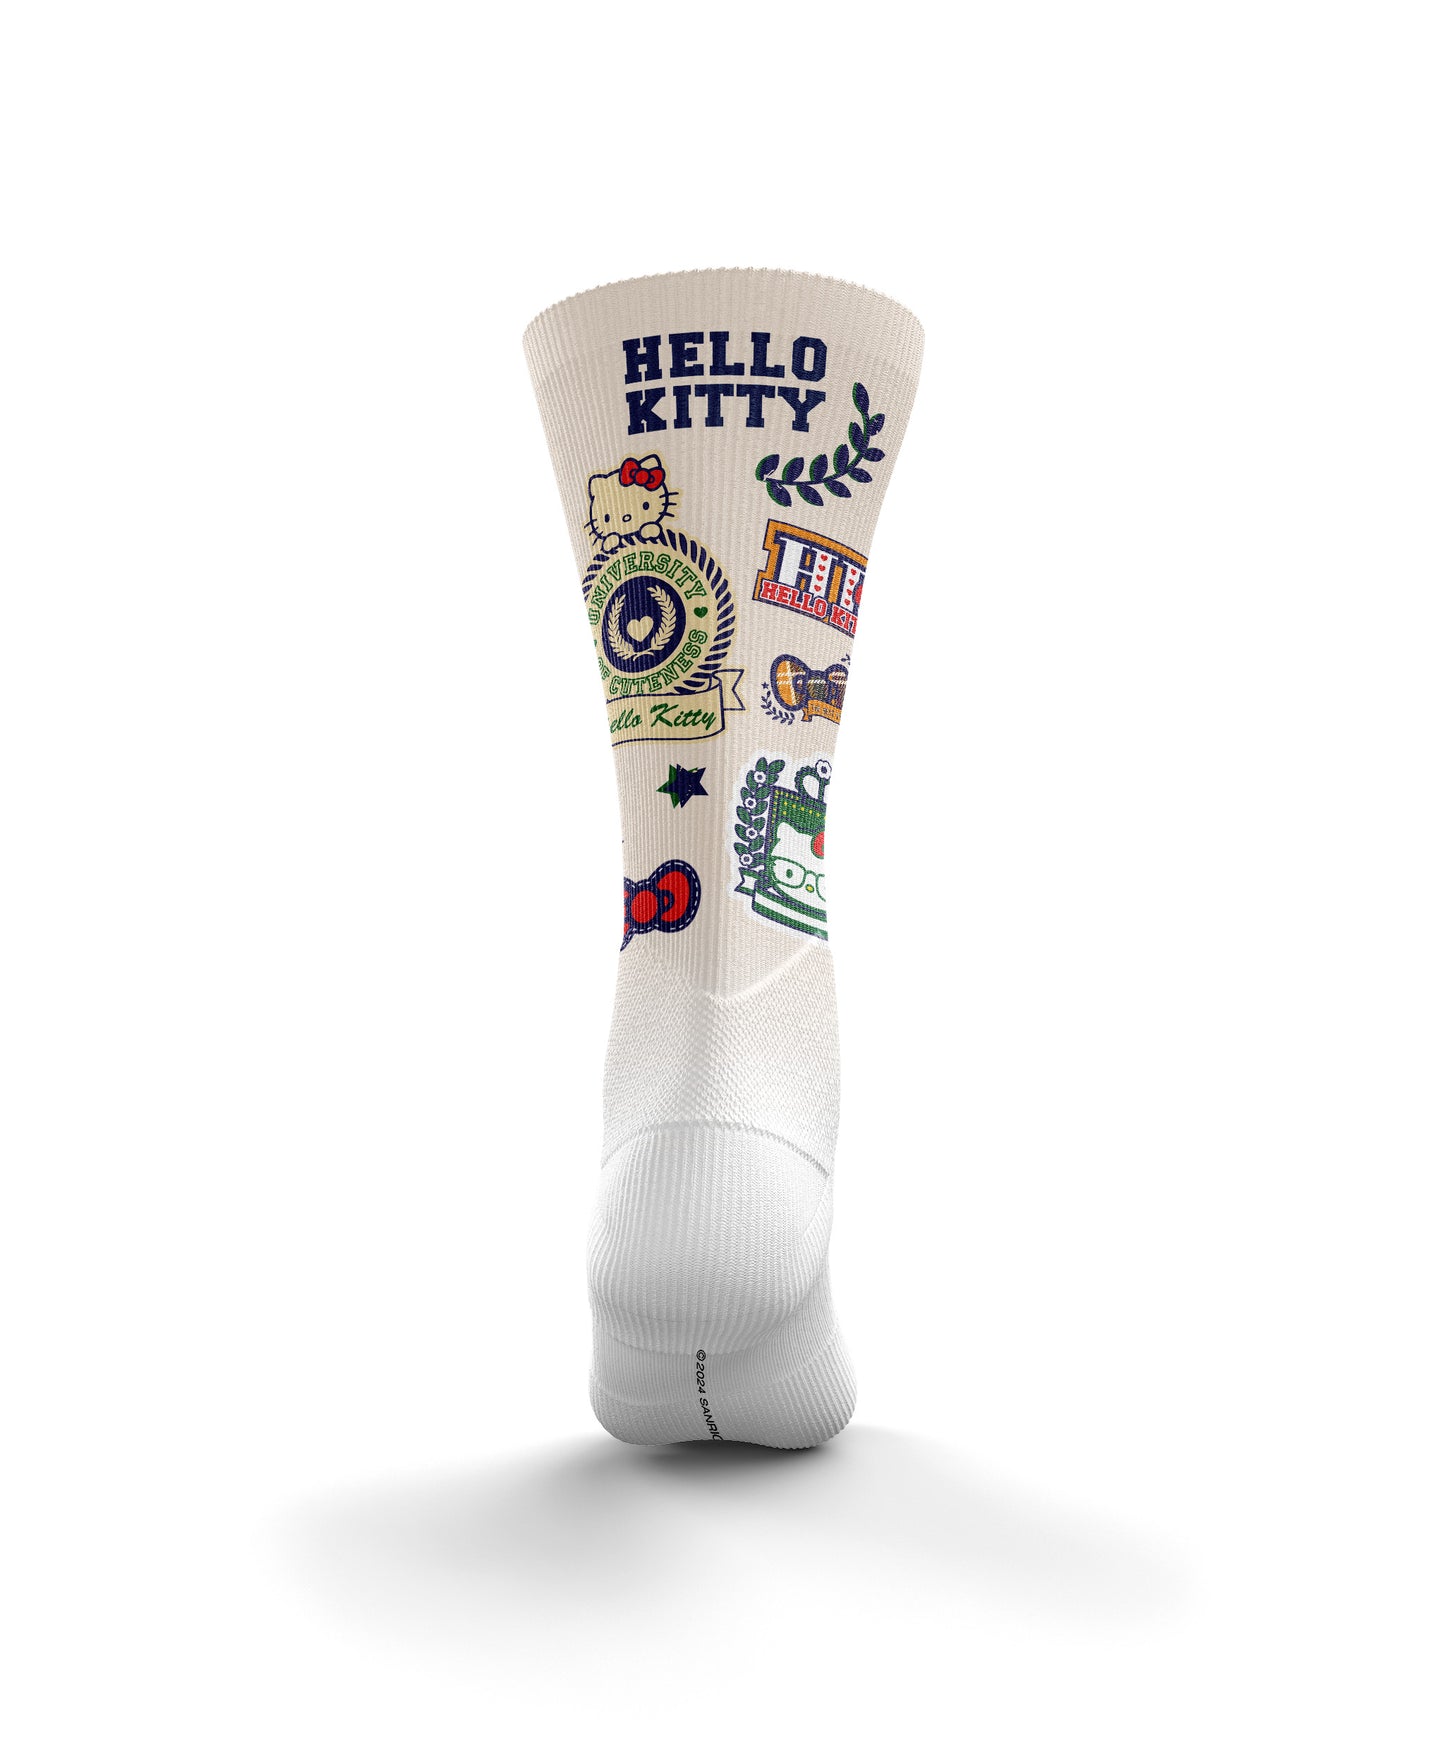 Funny Socks - Hello Kitty Cheerleading